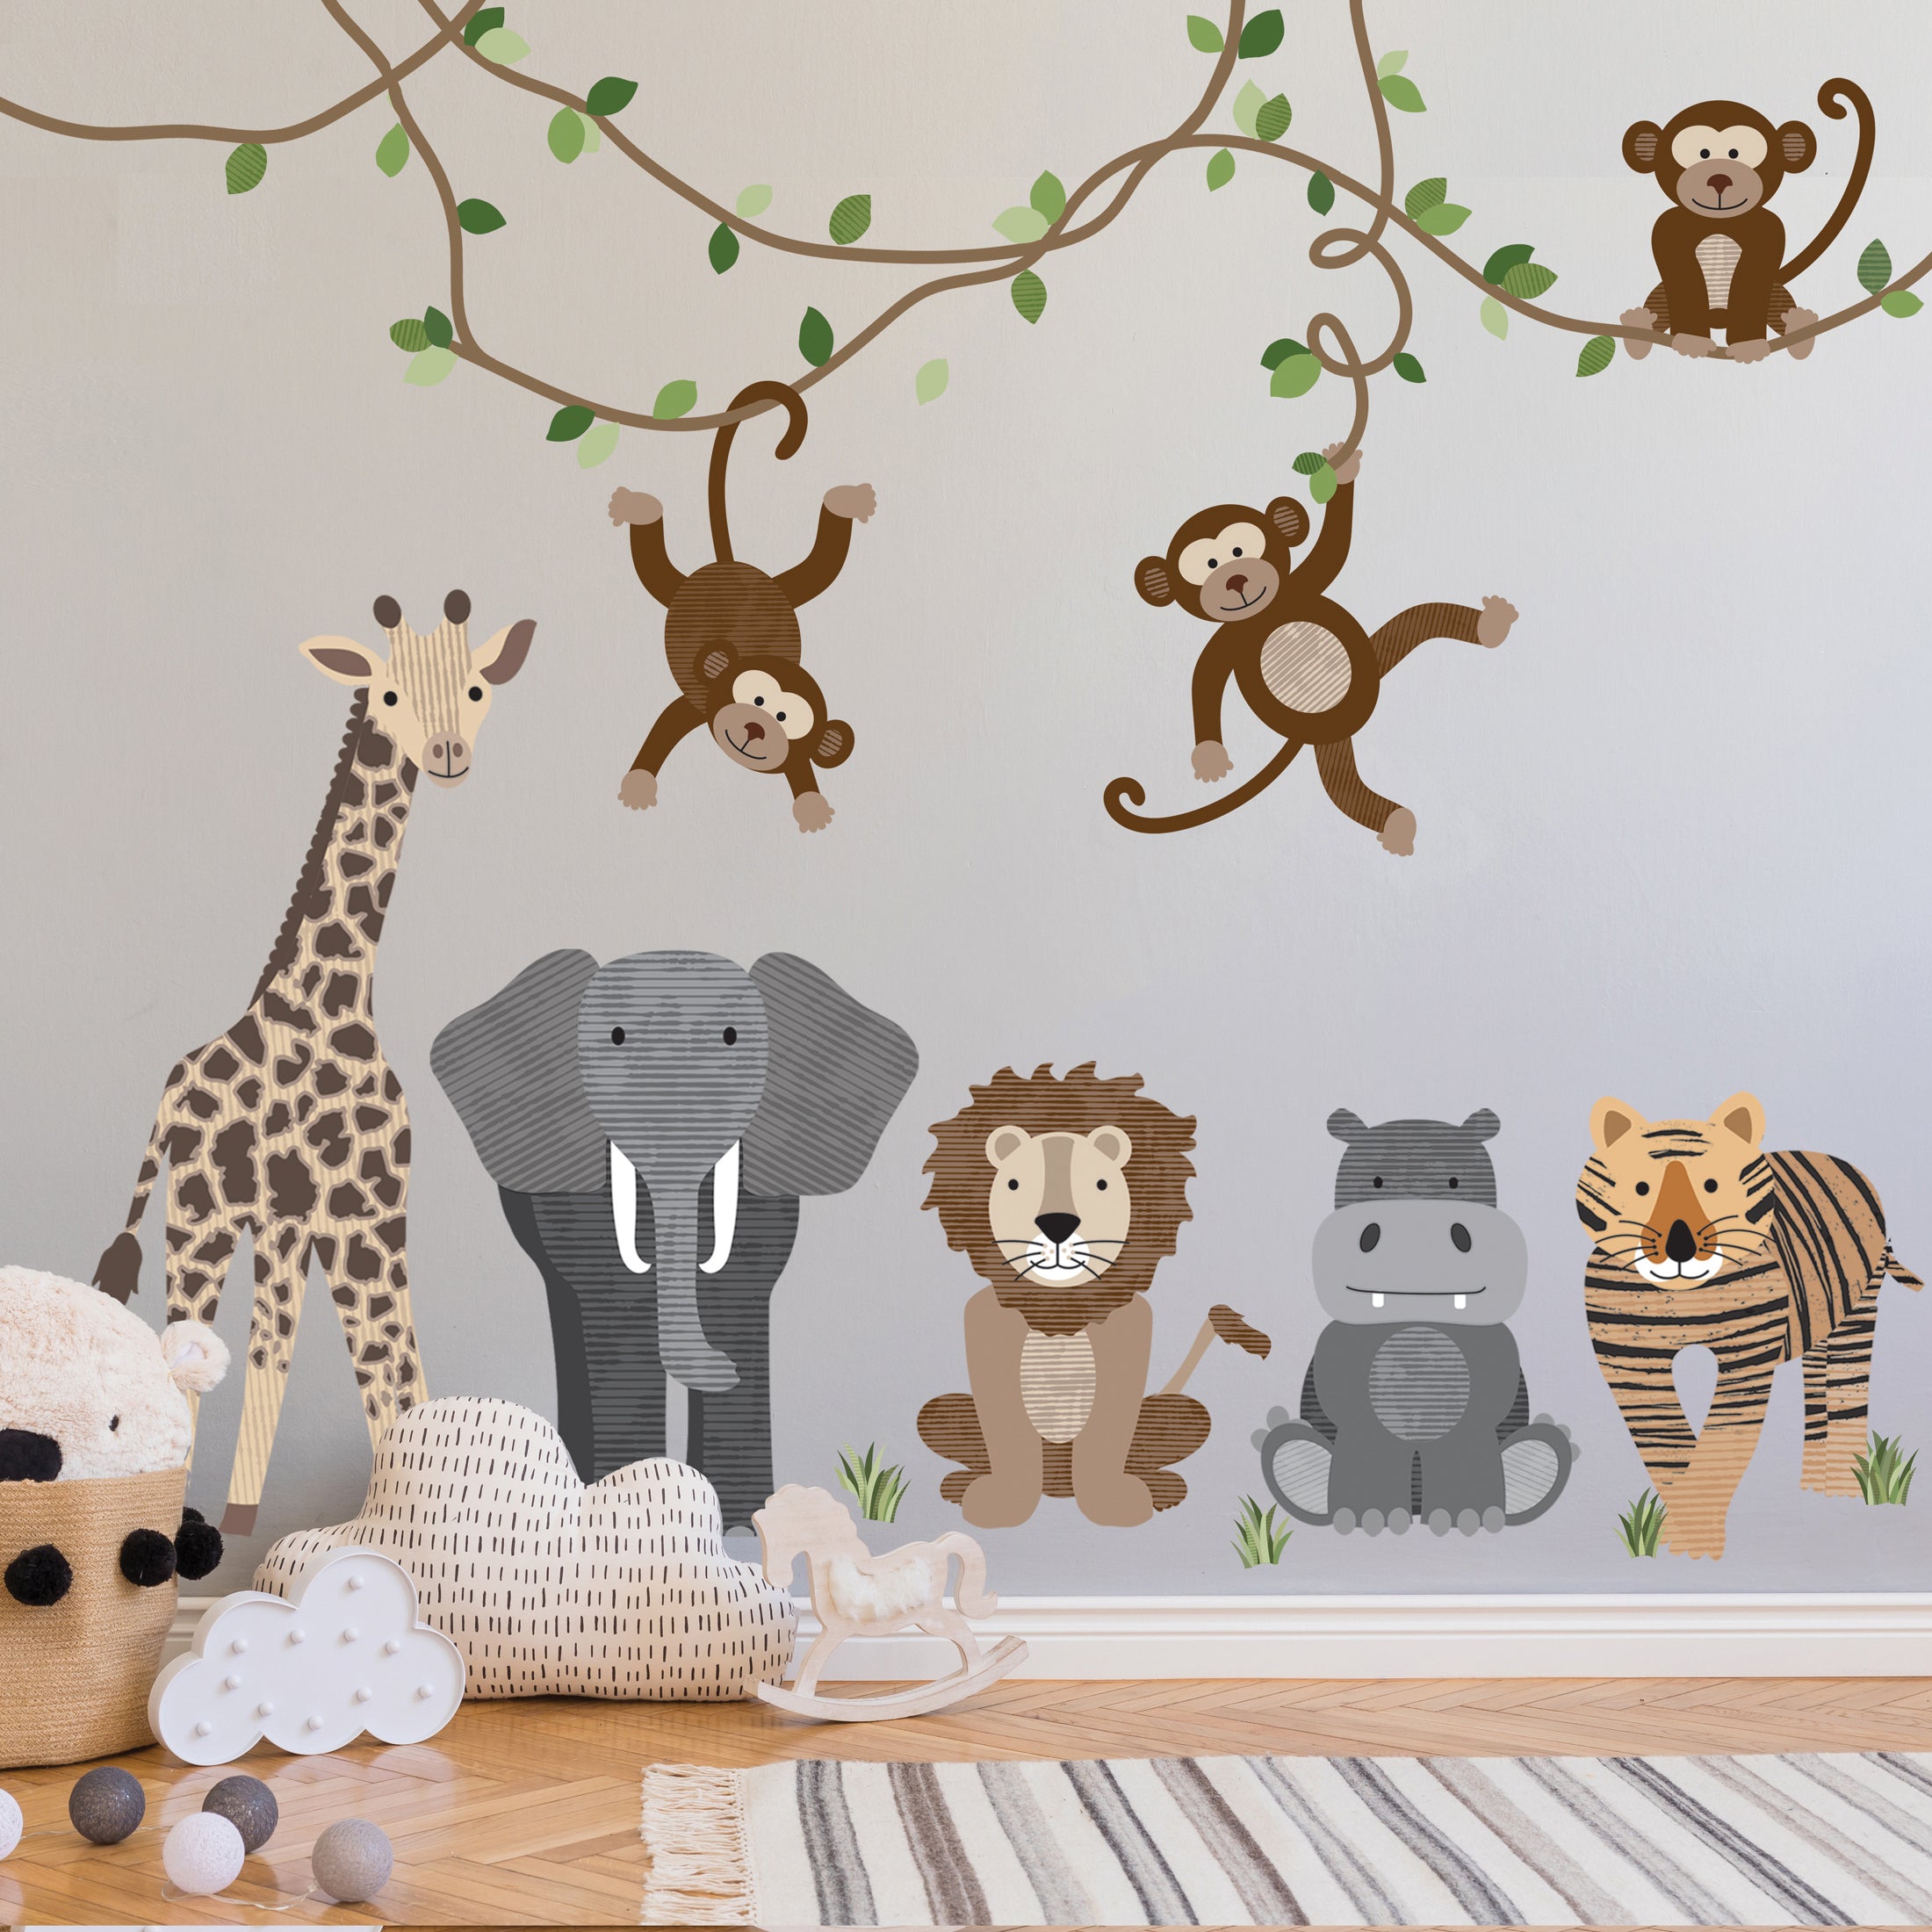  Jungle Animal Wall Decals Safari Animal Wall Stickers